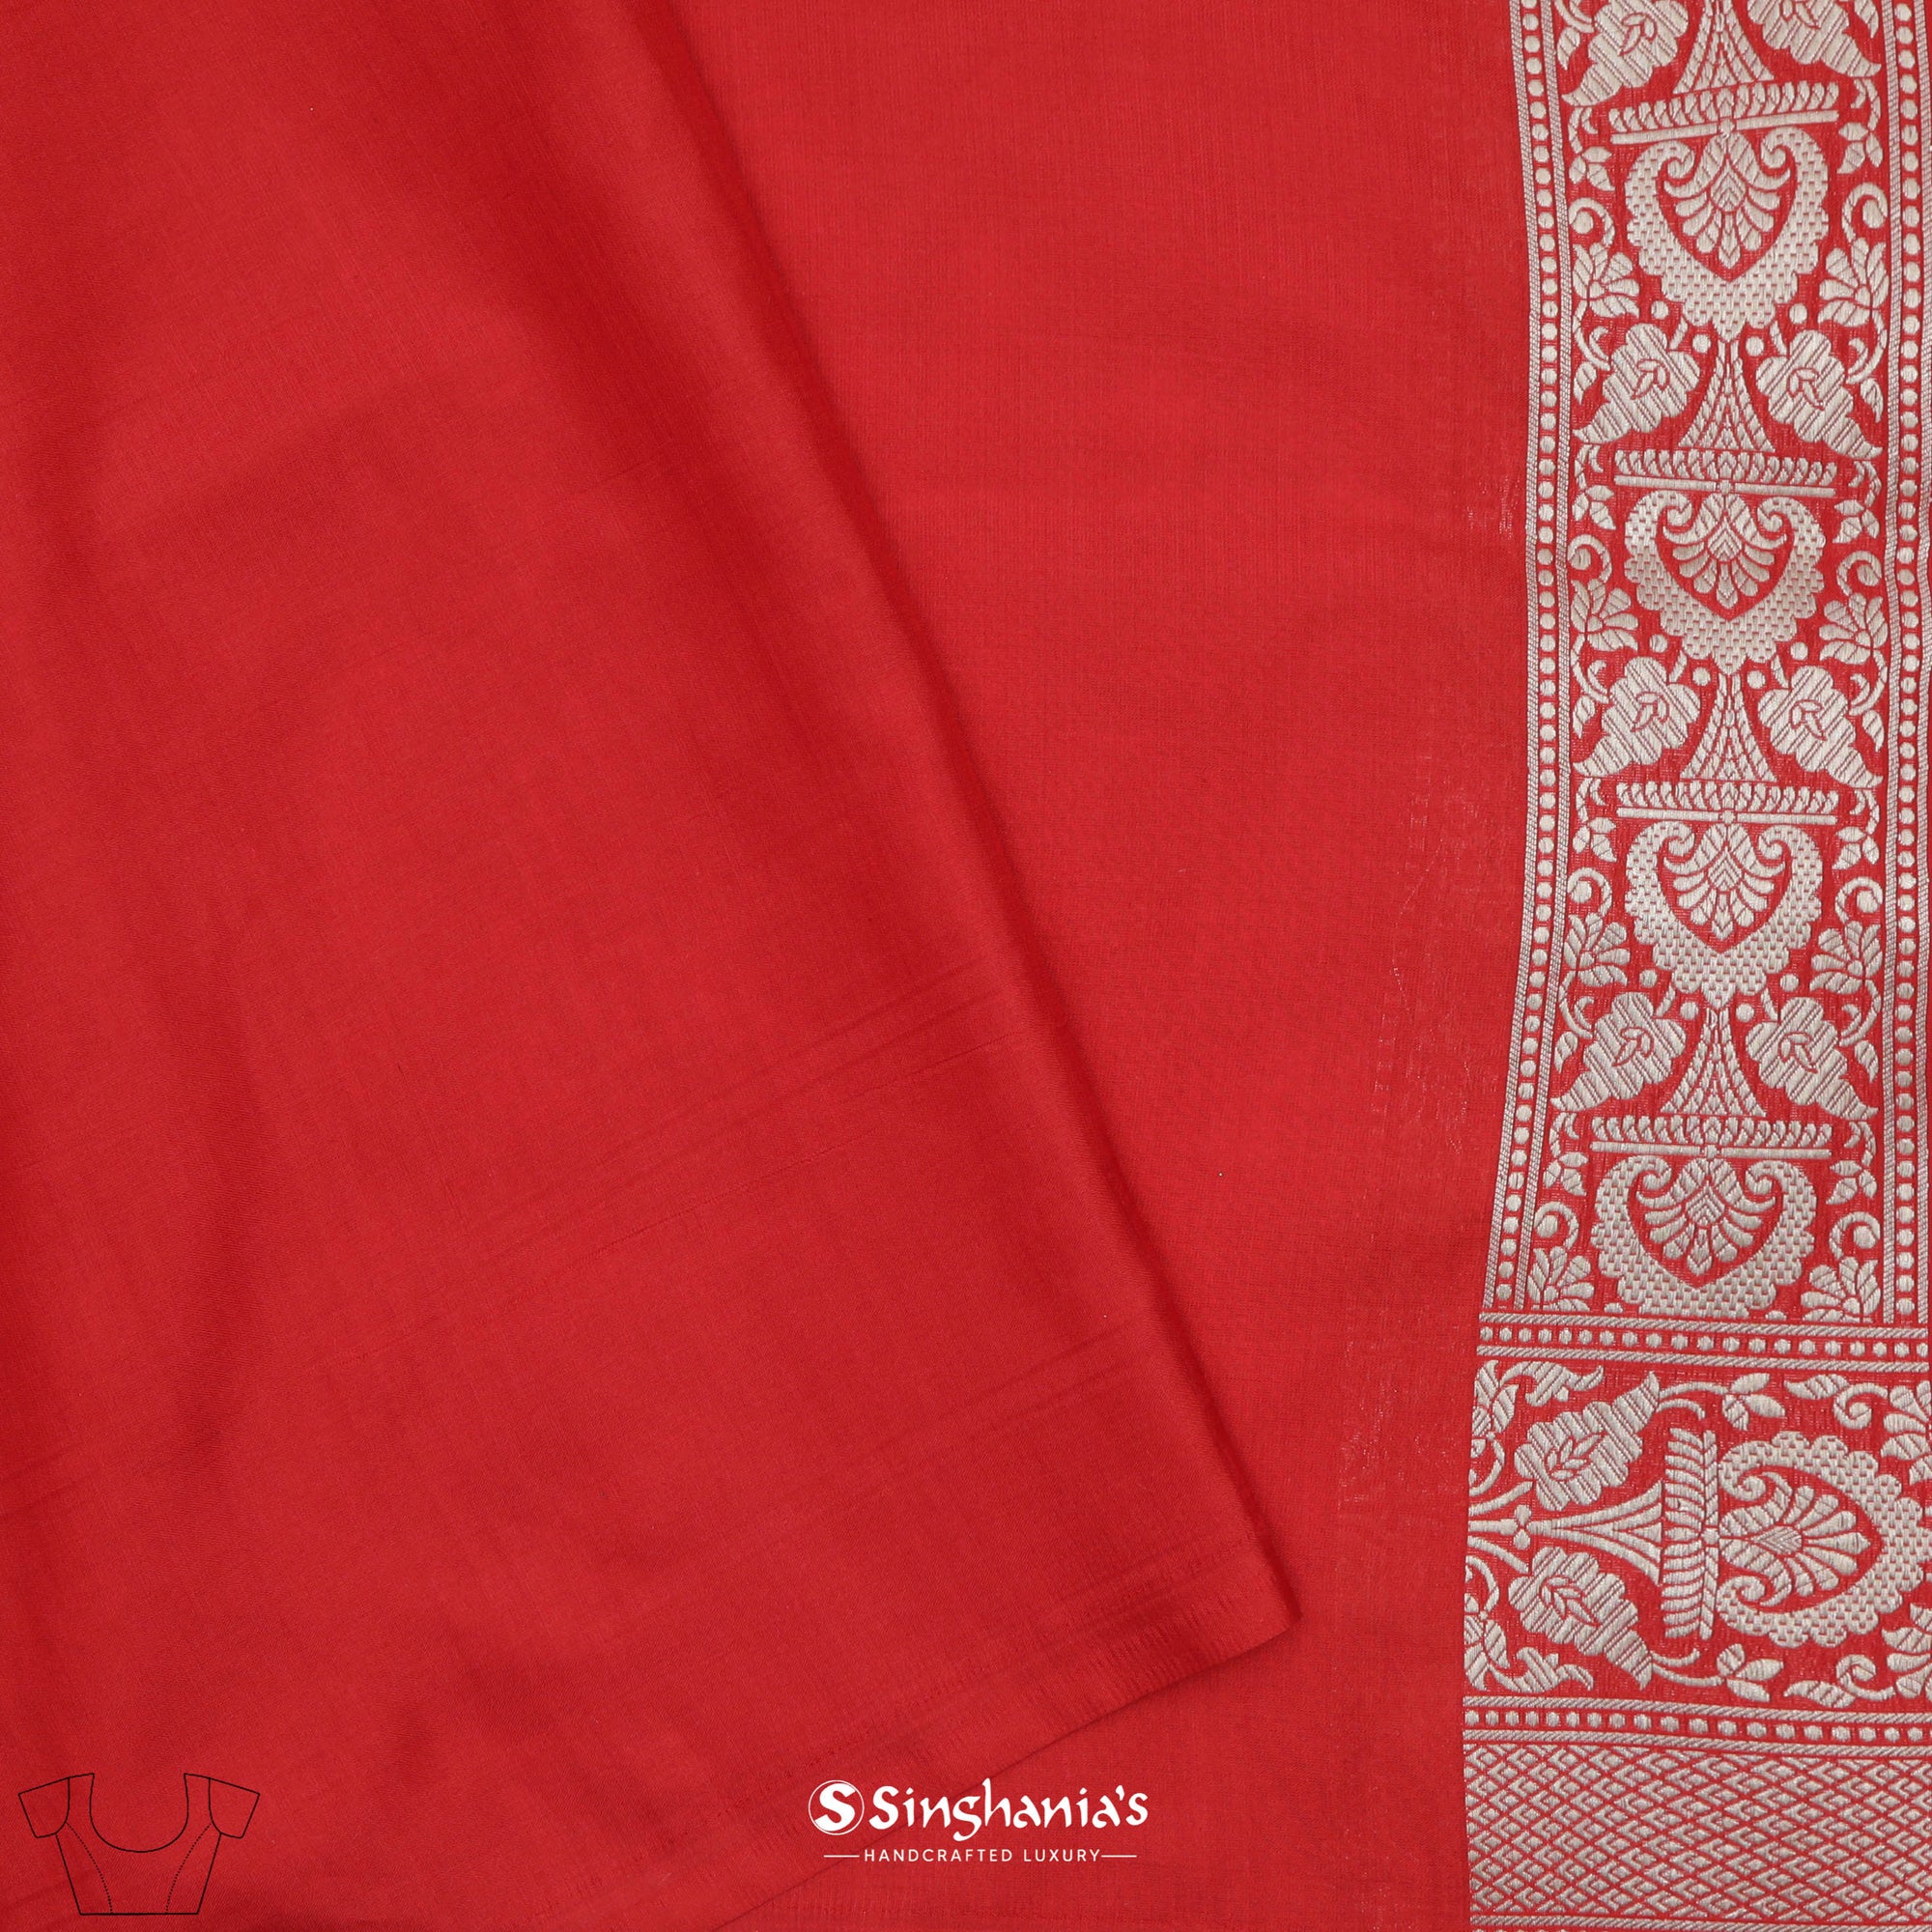 Fire Red Banarasi Silk Saree With Floral Jaal Weaving